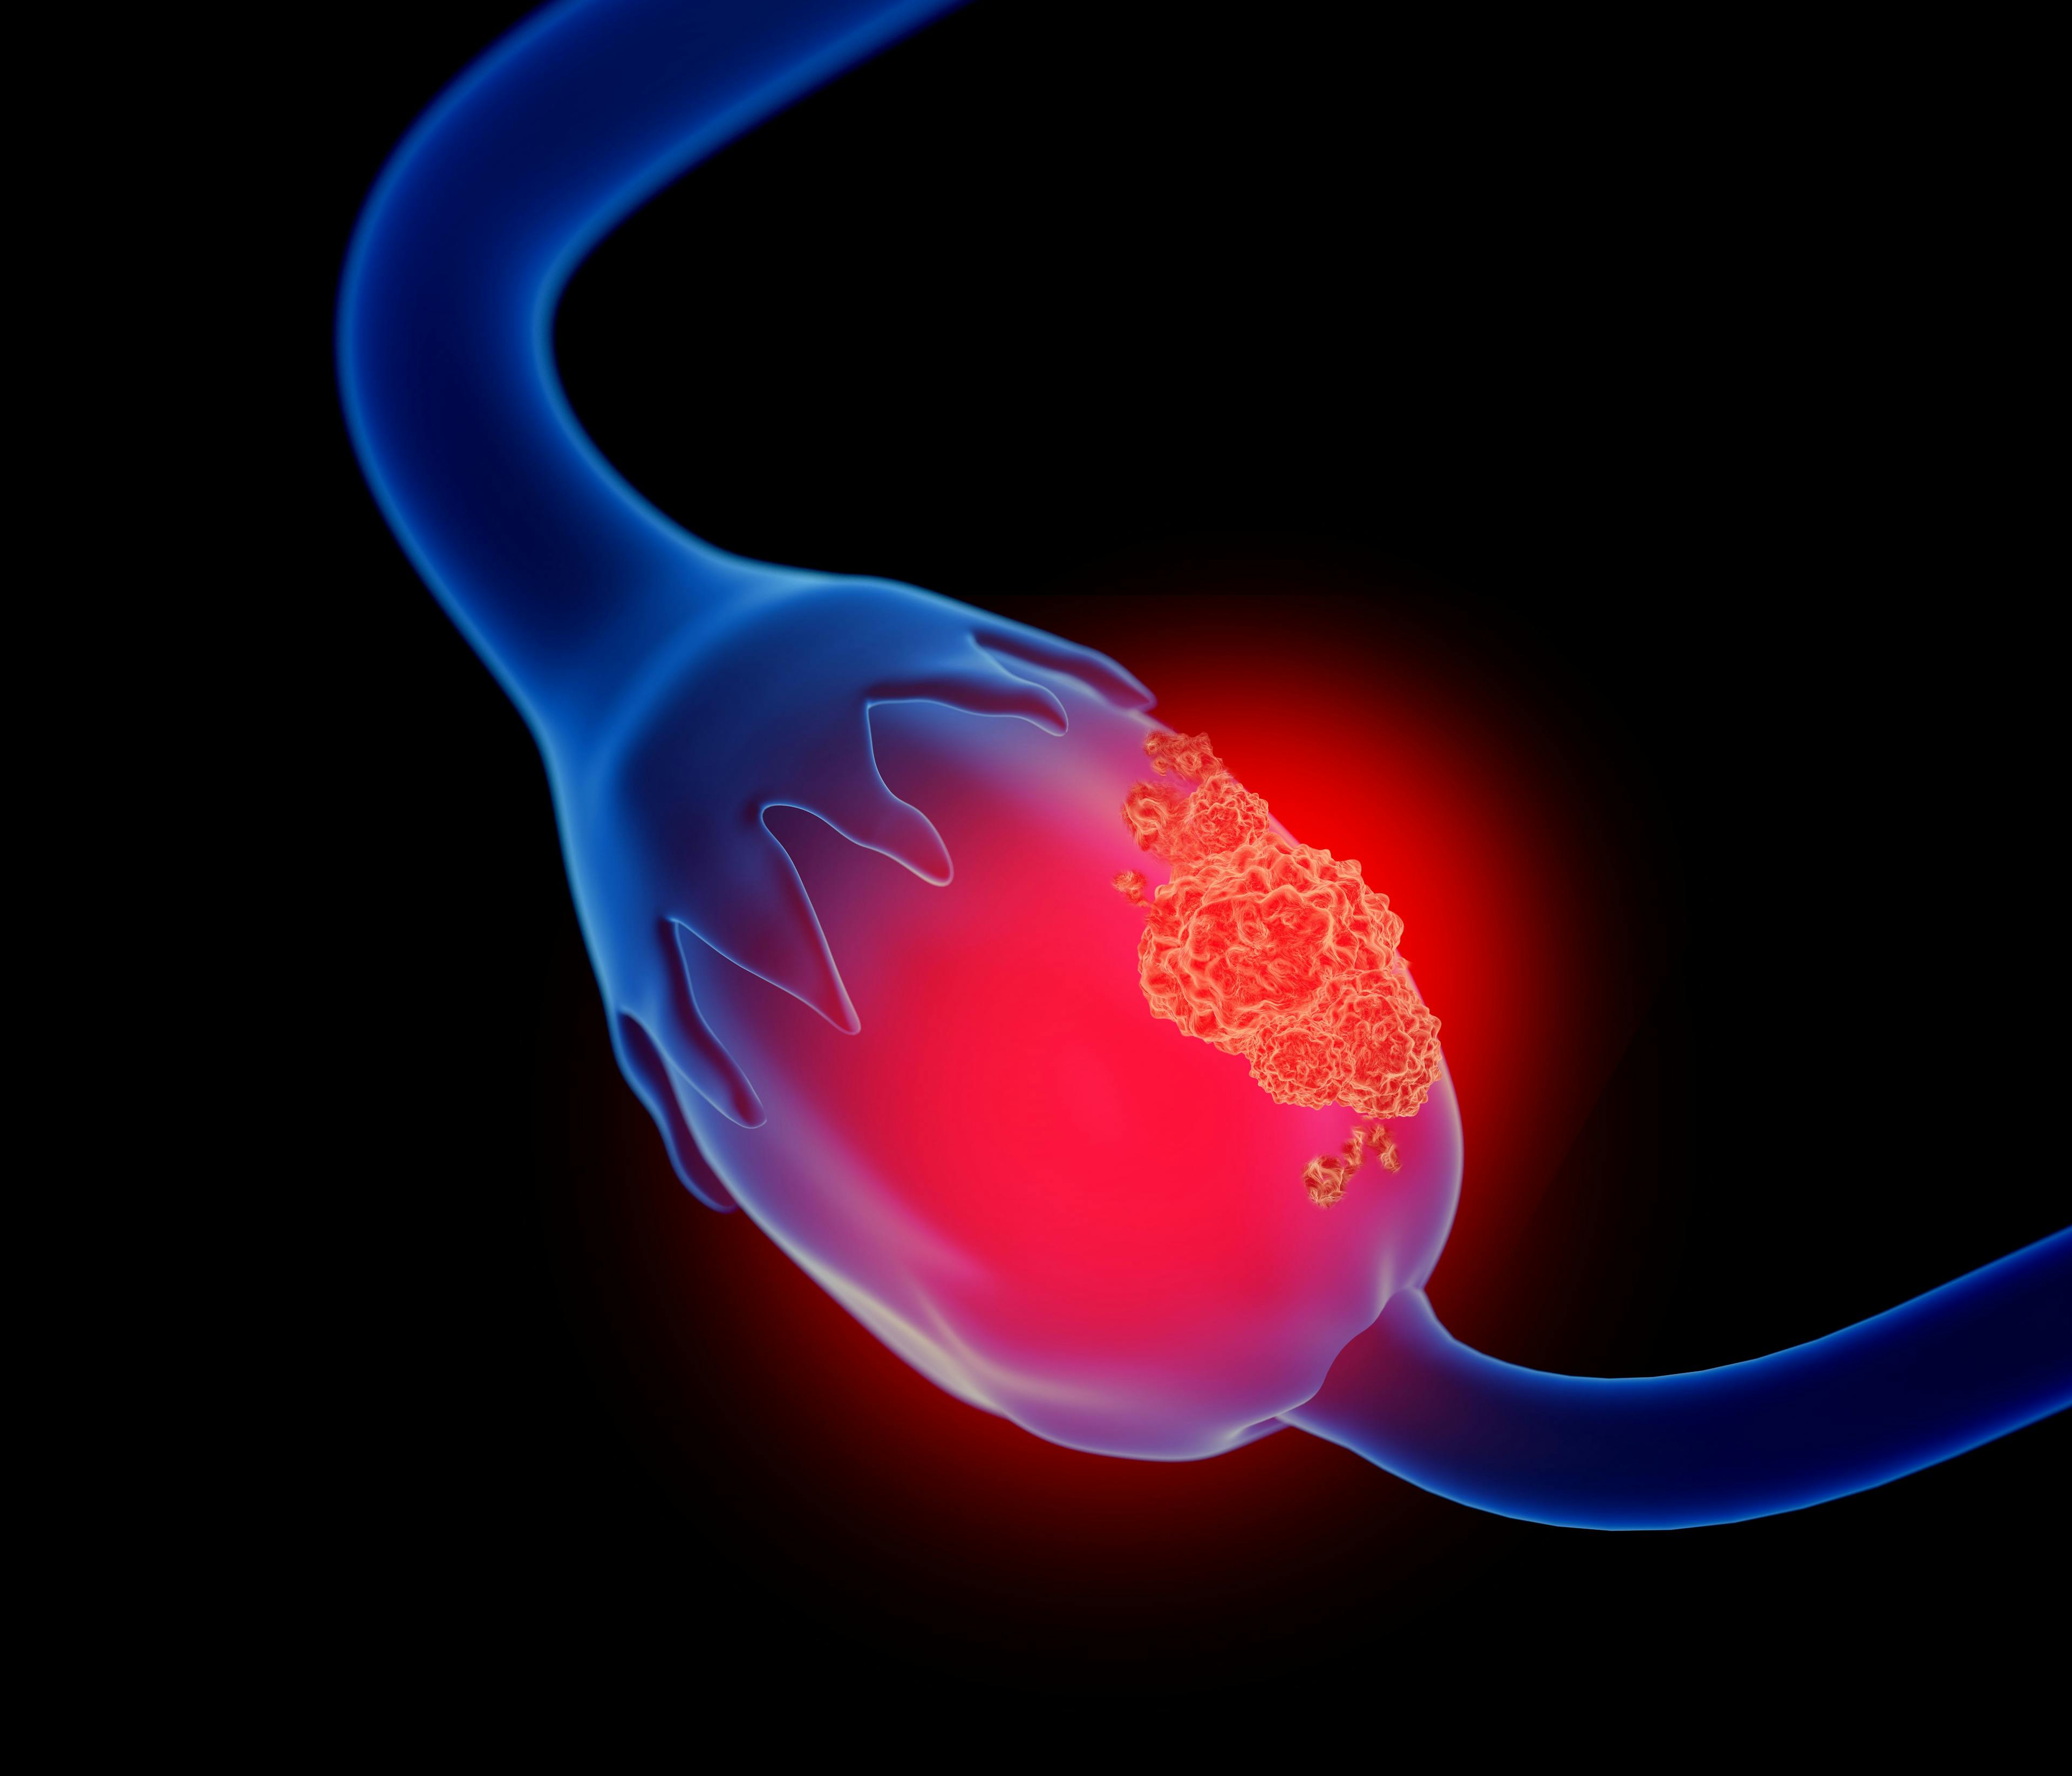 3d illustration of ovarian cancer | Image Credit: © Lars Neumann -www.stock.adobe.com